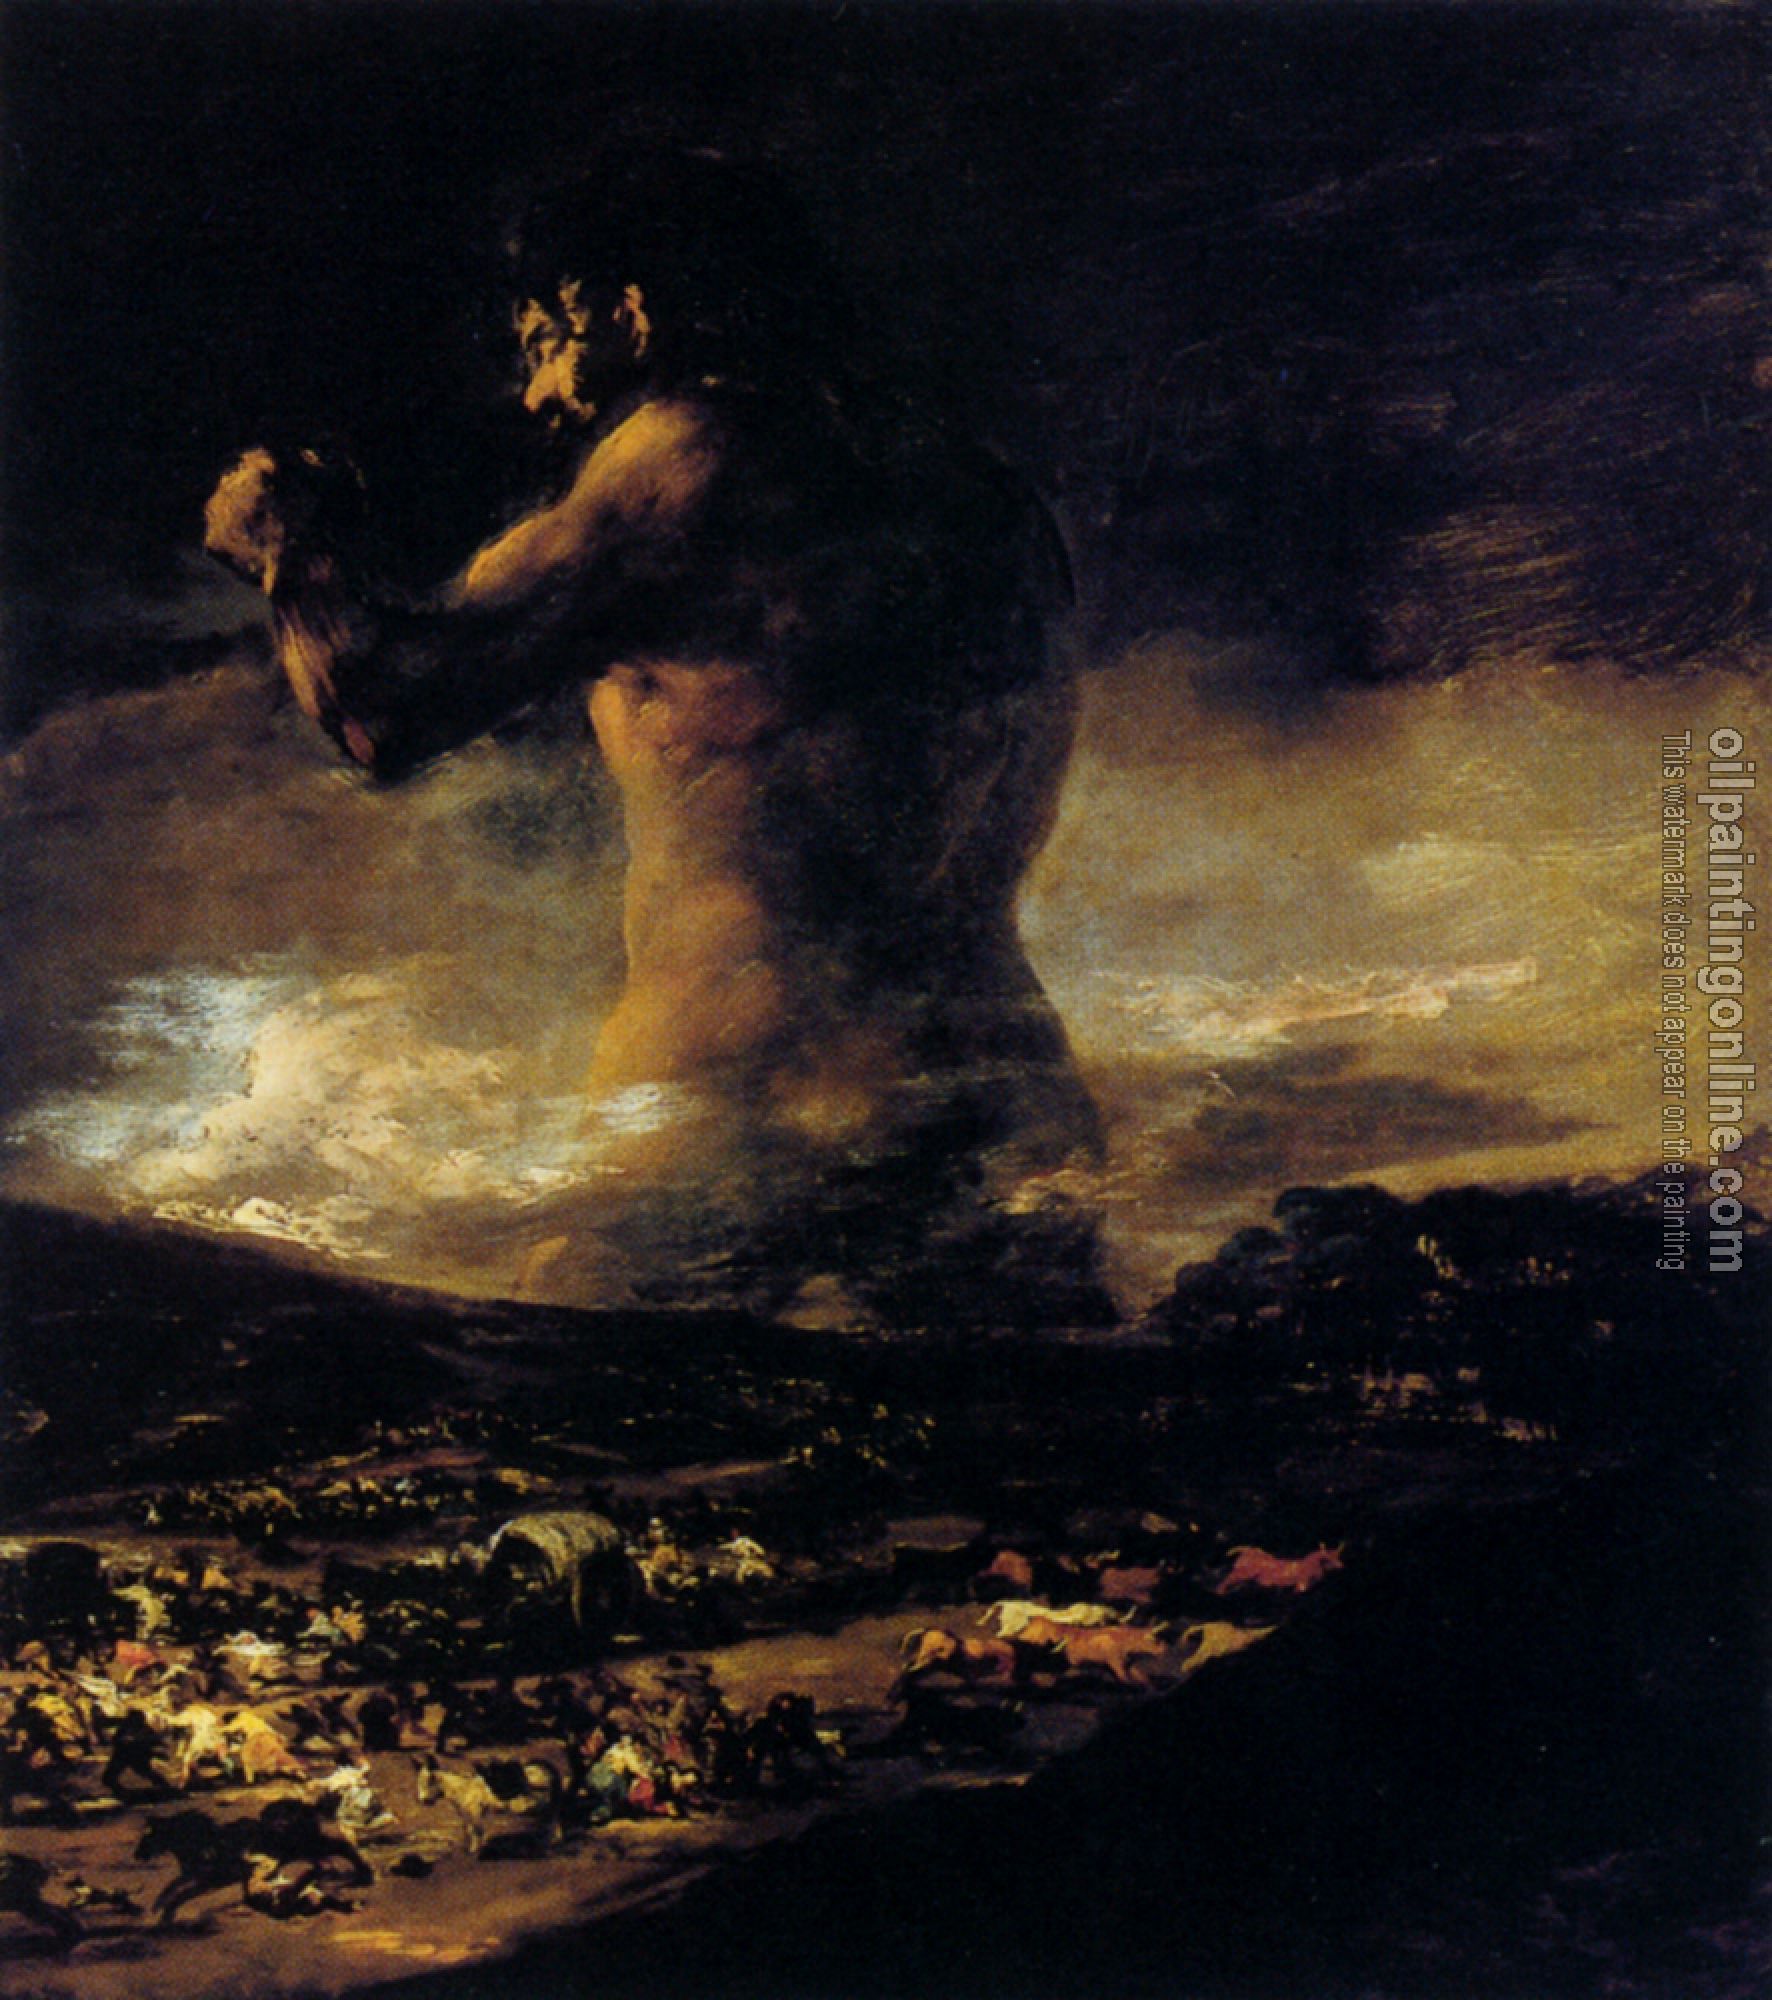 Goya, Francisco de - The Colossus